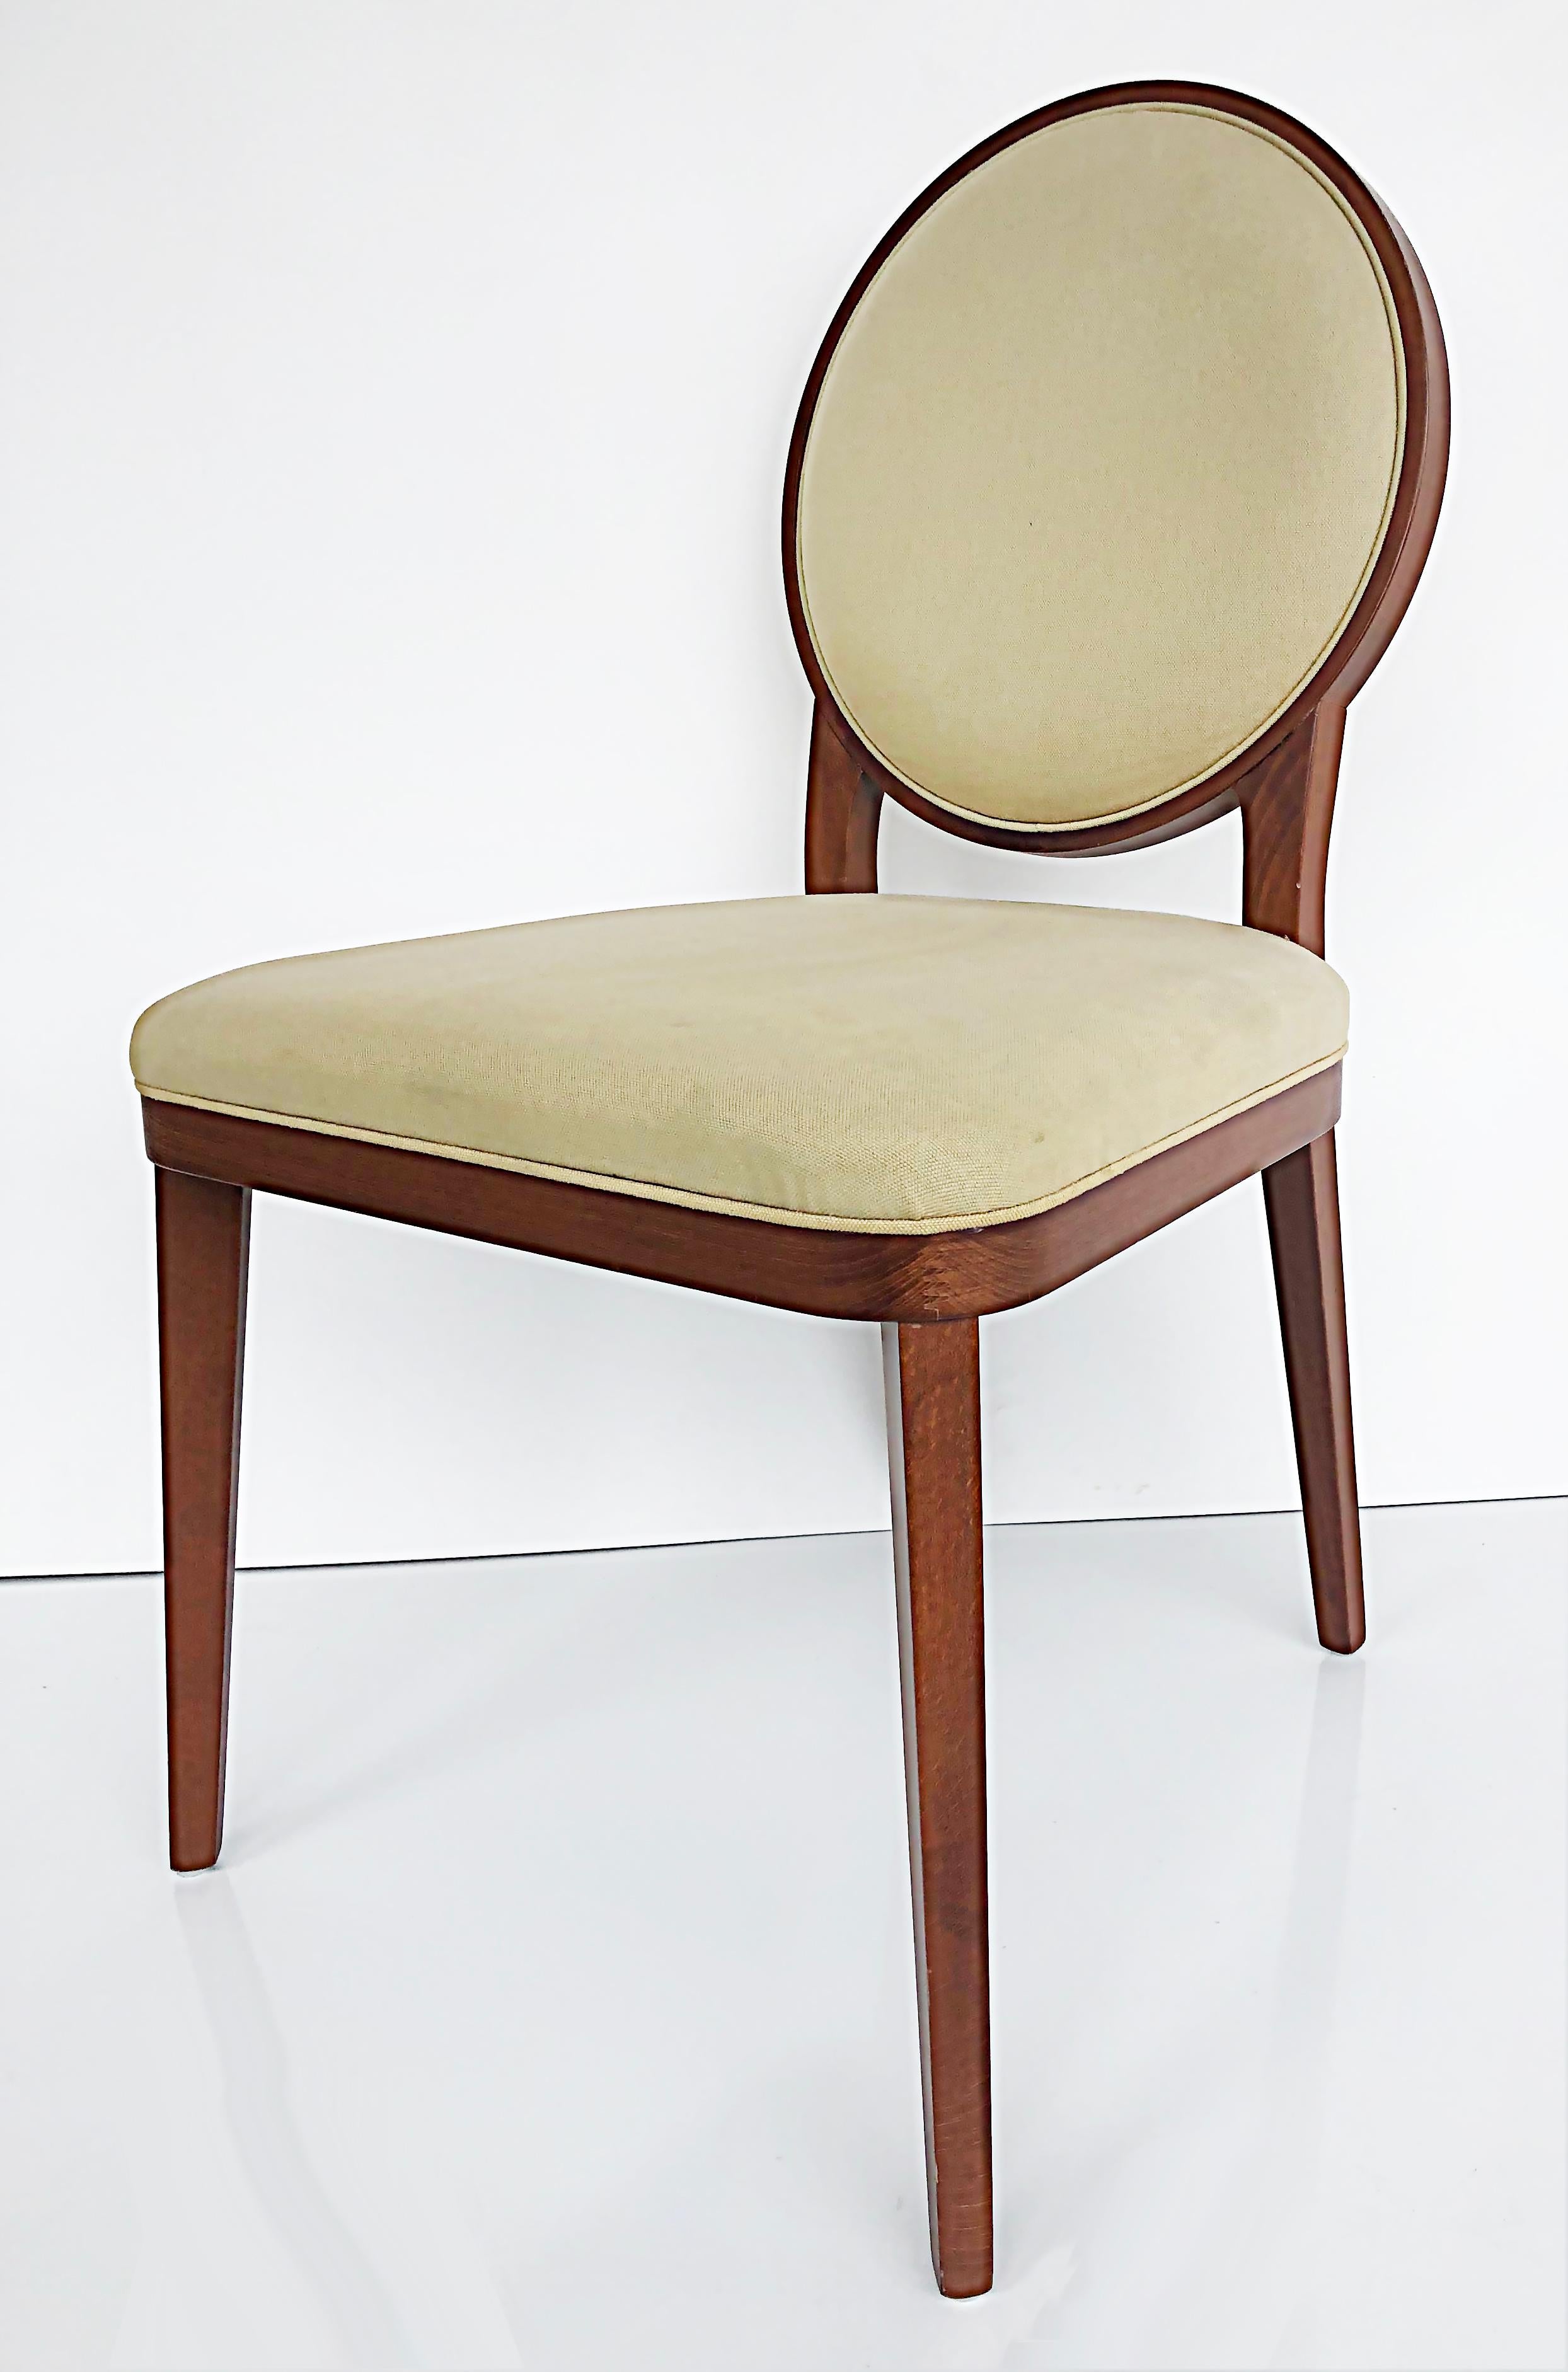 20th Century Bross Studio Riforma Italy Art Deco Style Beech Wood Chairs, Set of 6